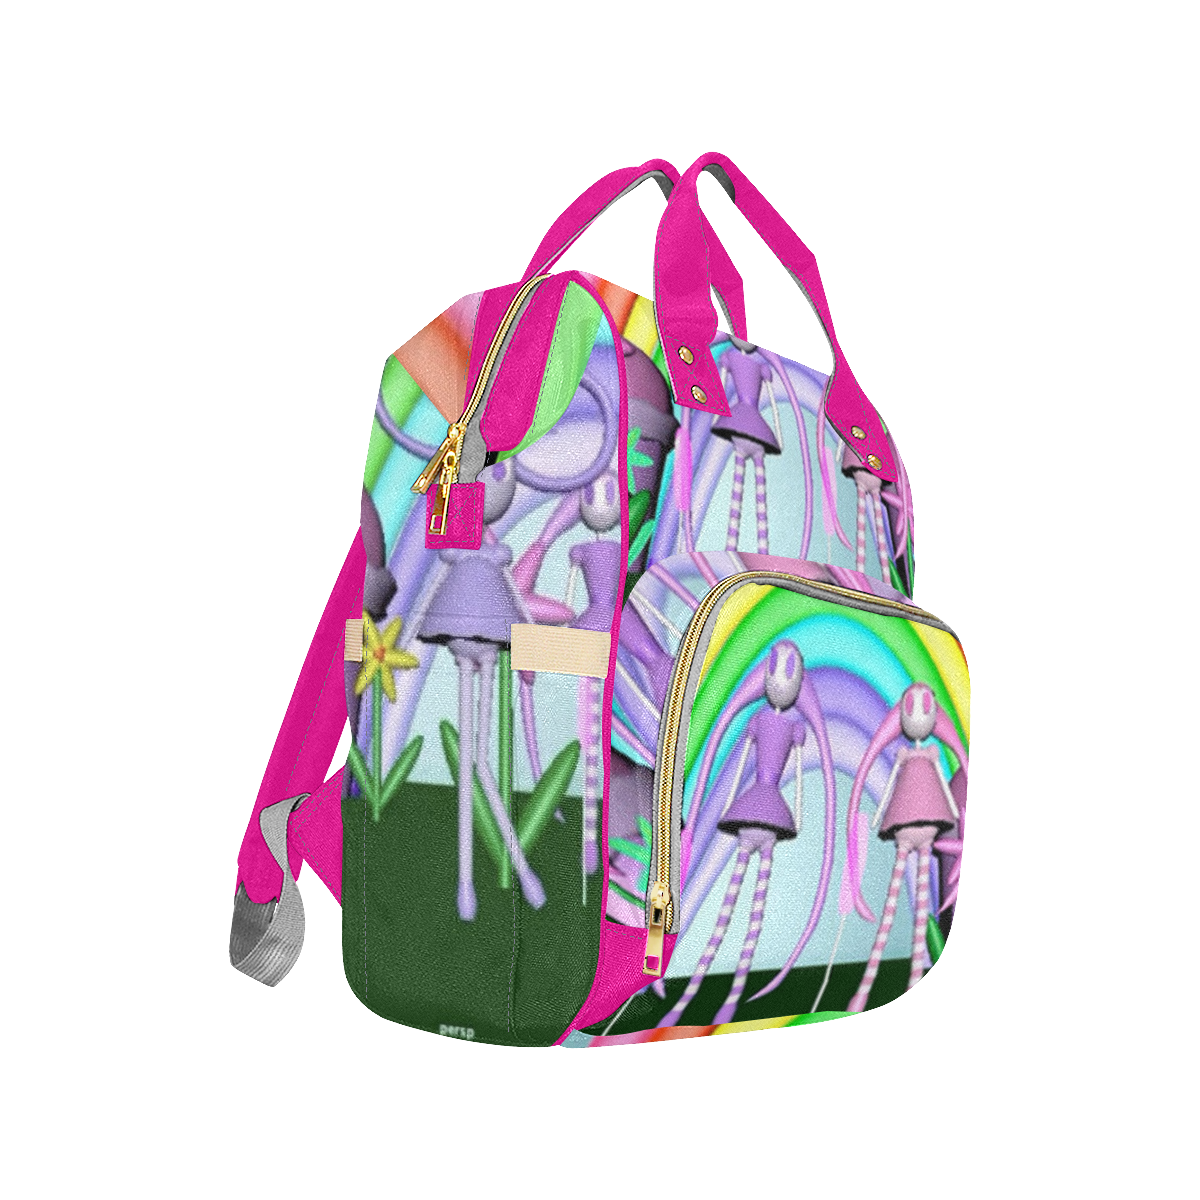 betsymaymissypopbag Multi-Function Diaper Backpack/Diaper Bag (Model 1688)